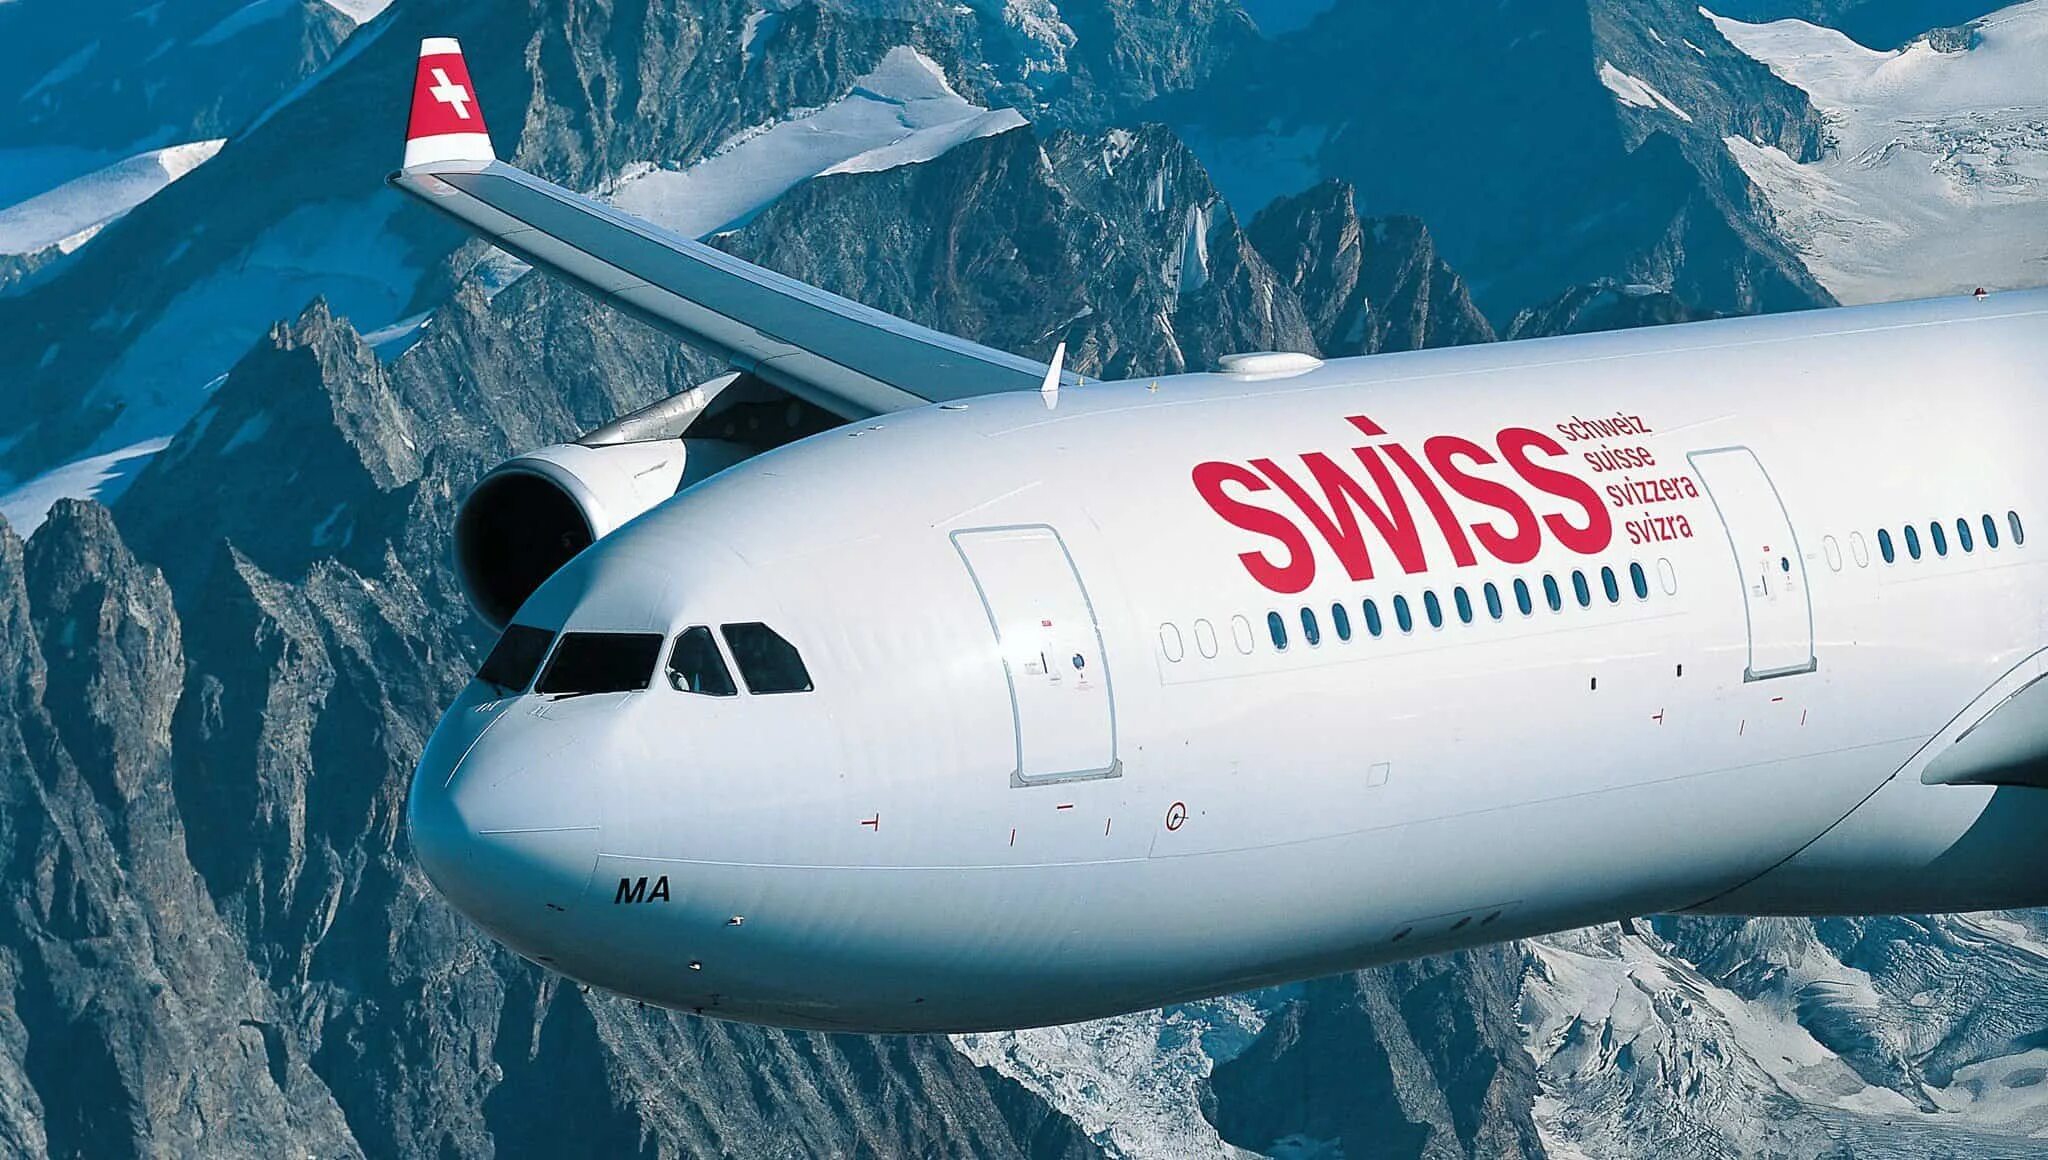 Свисс Эйрлайнс. Swiss International Air lines. Swiss Airbus. Swiss + авиалинии самолеты.